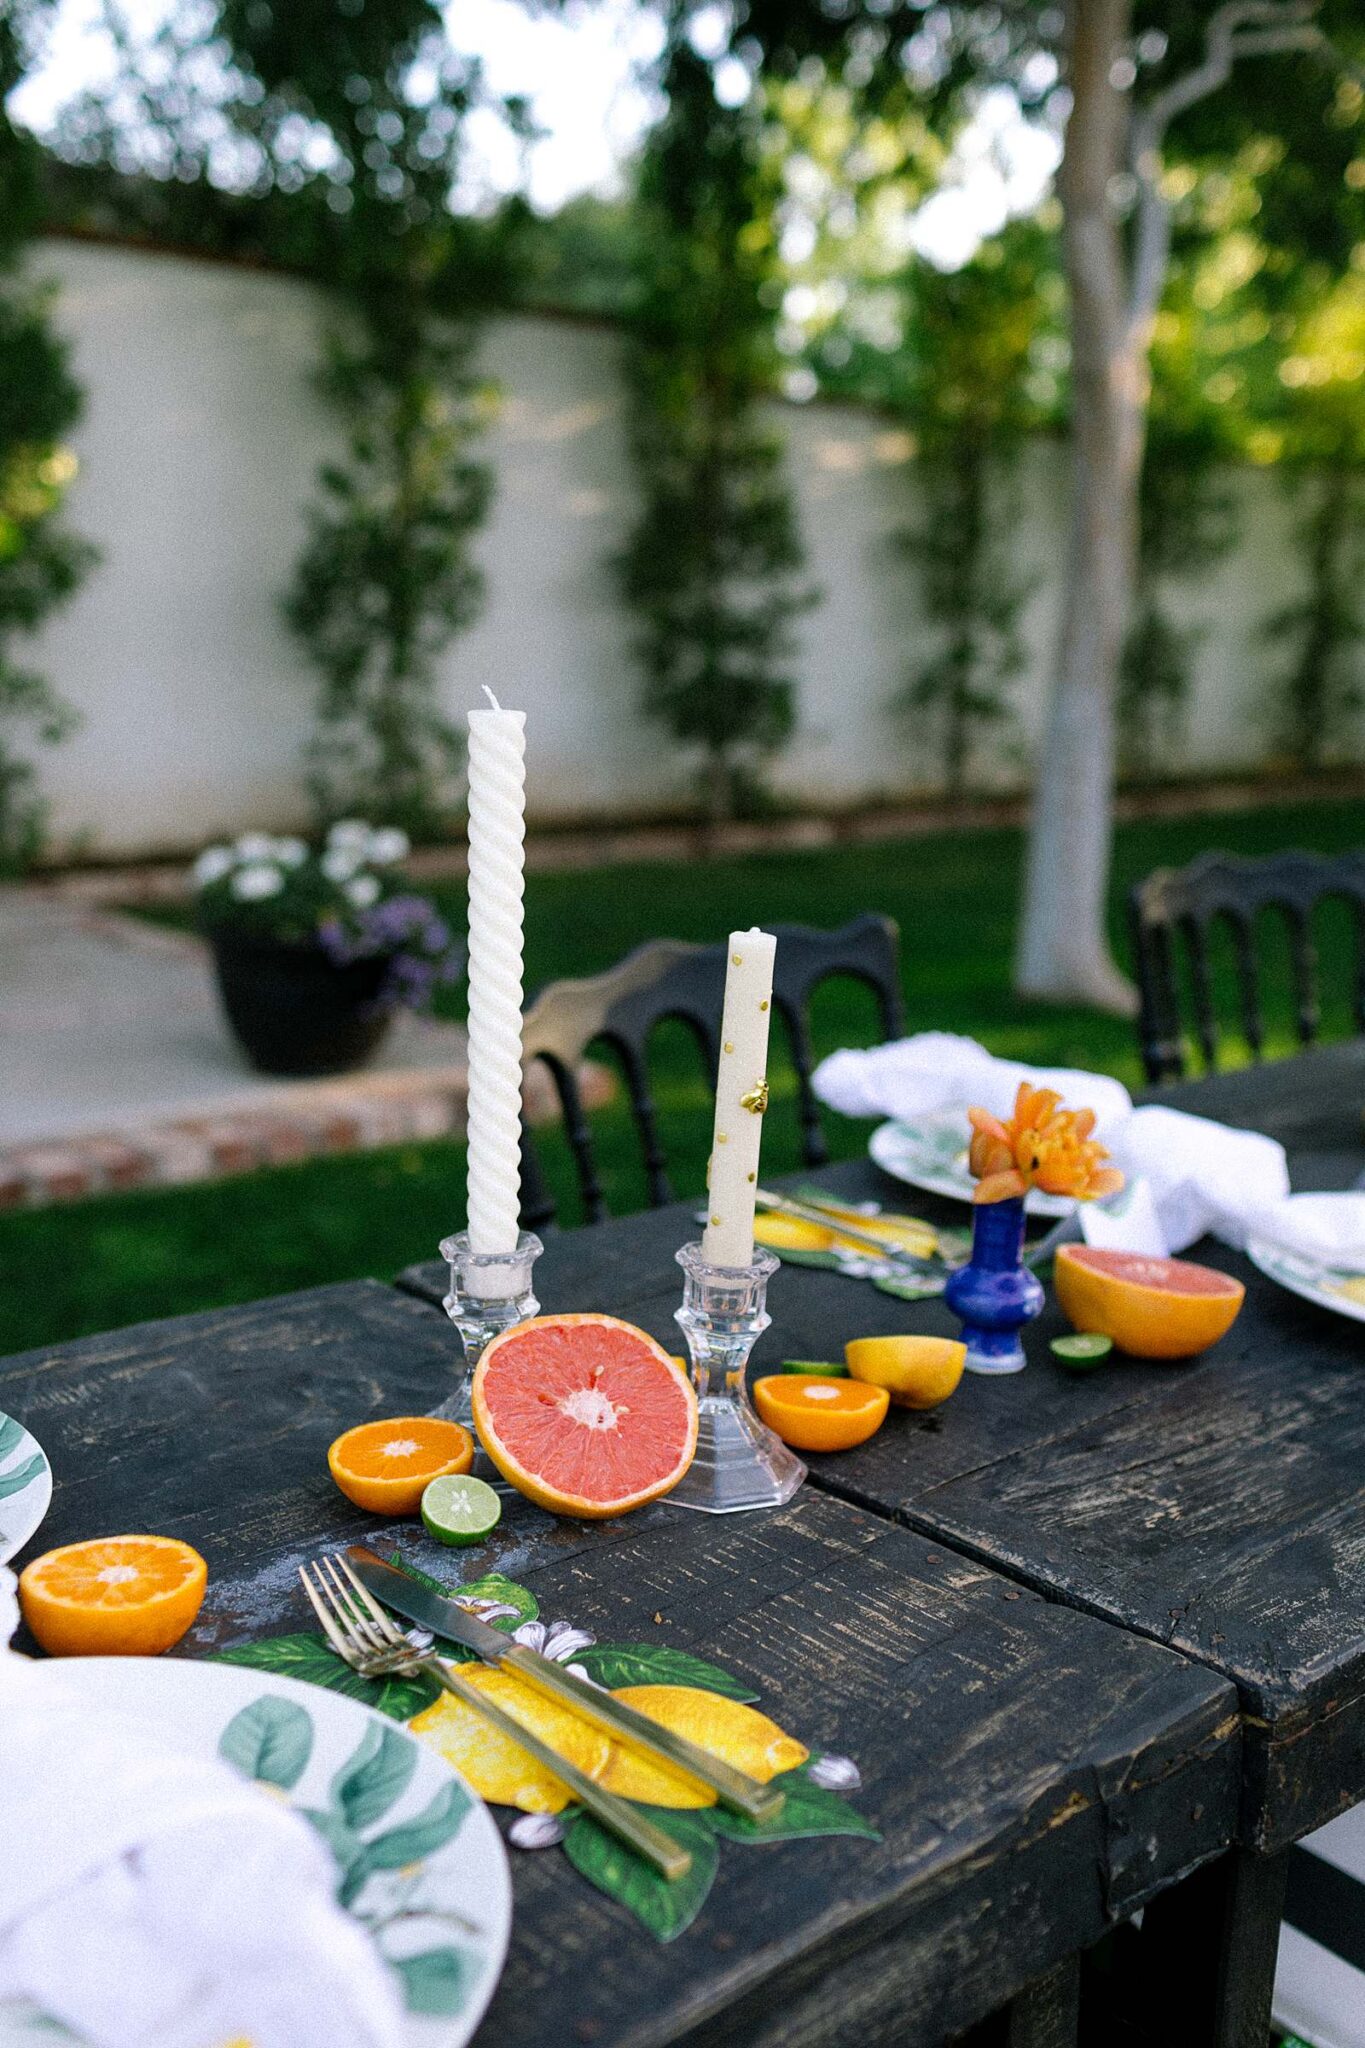 Garden party: A Citrus Food Themed Potluck - Diana Elizabeth